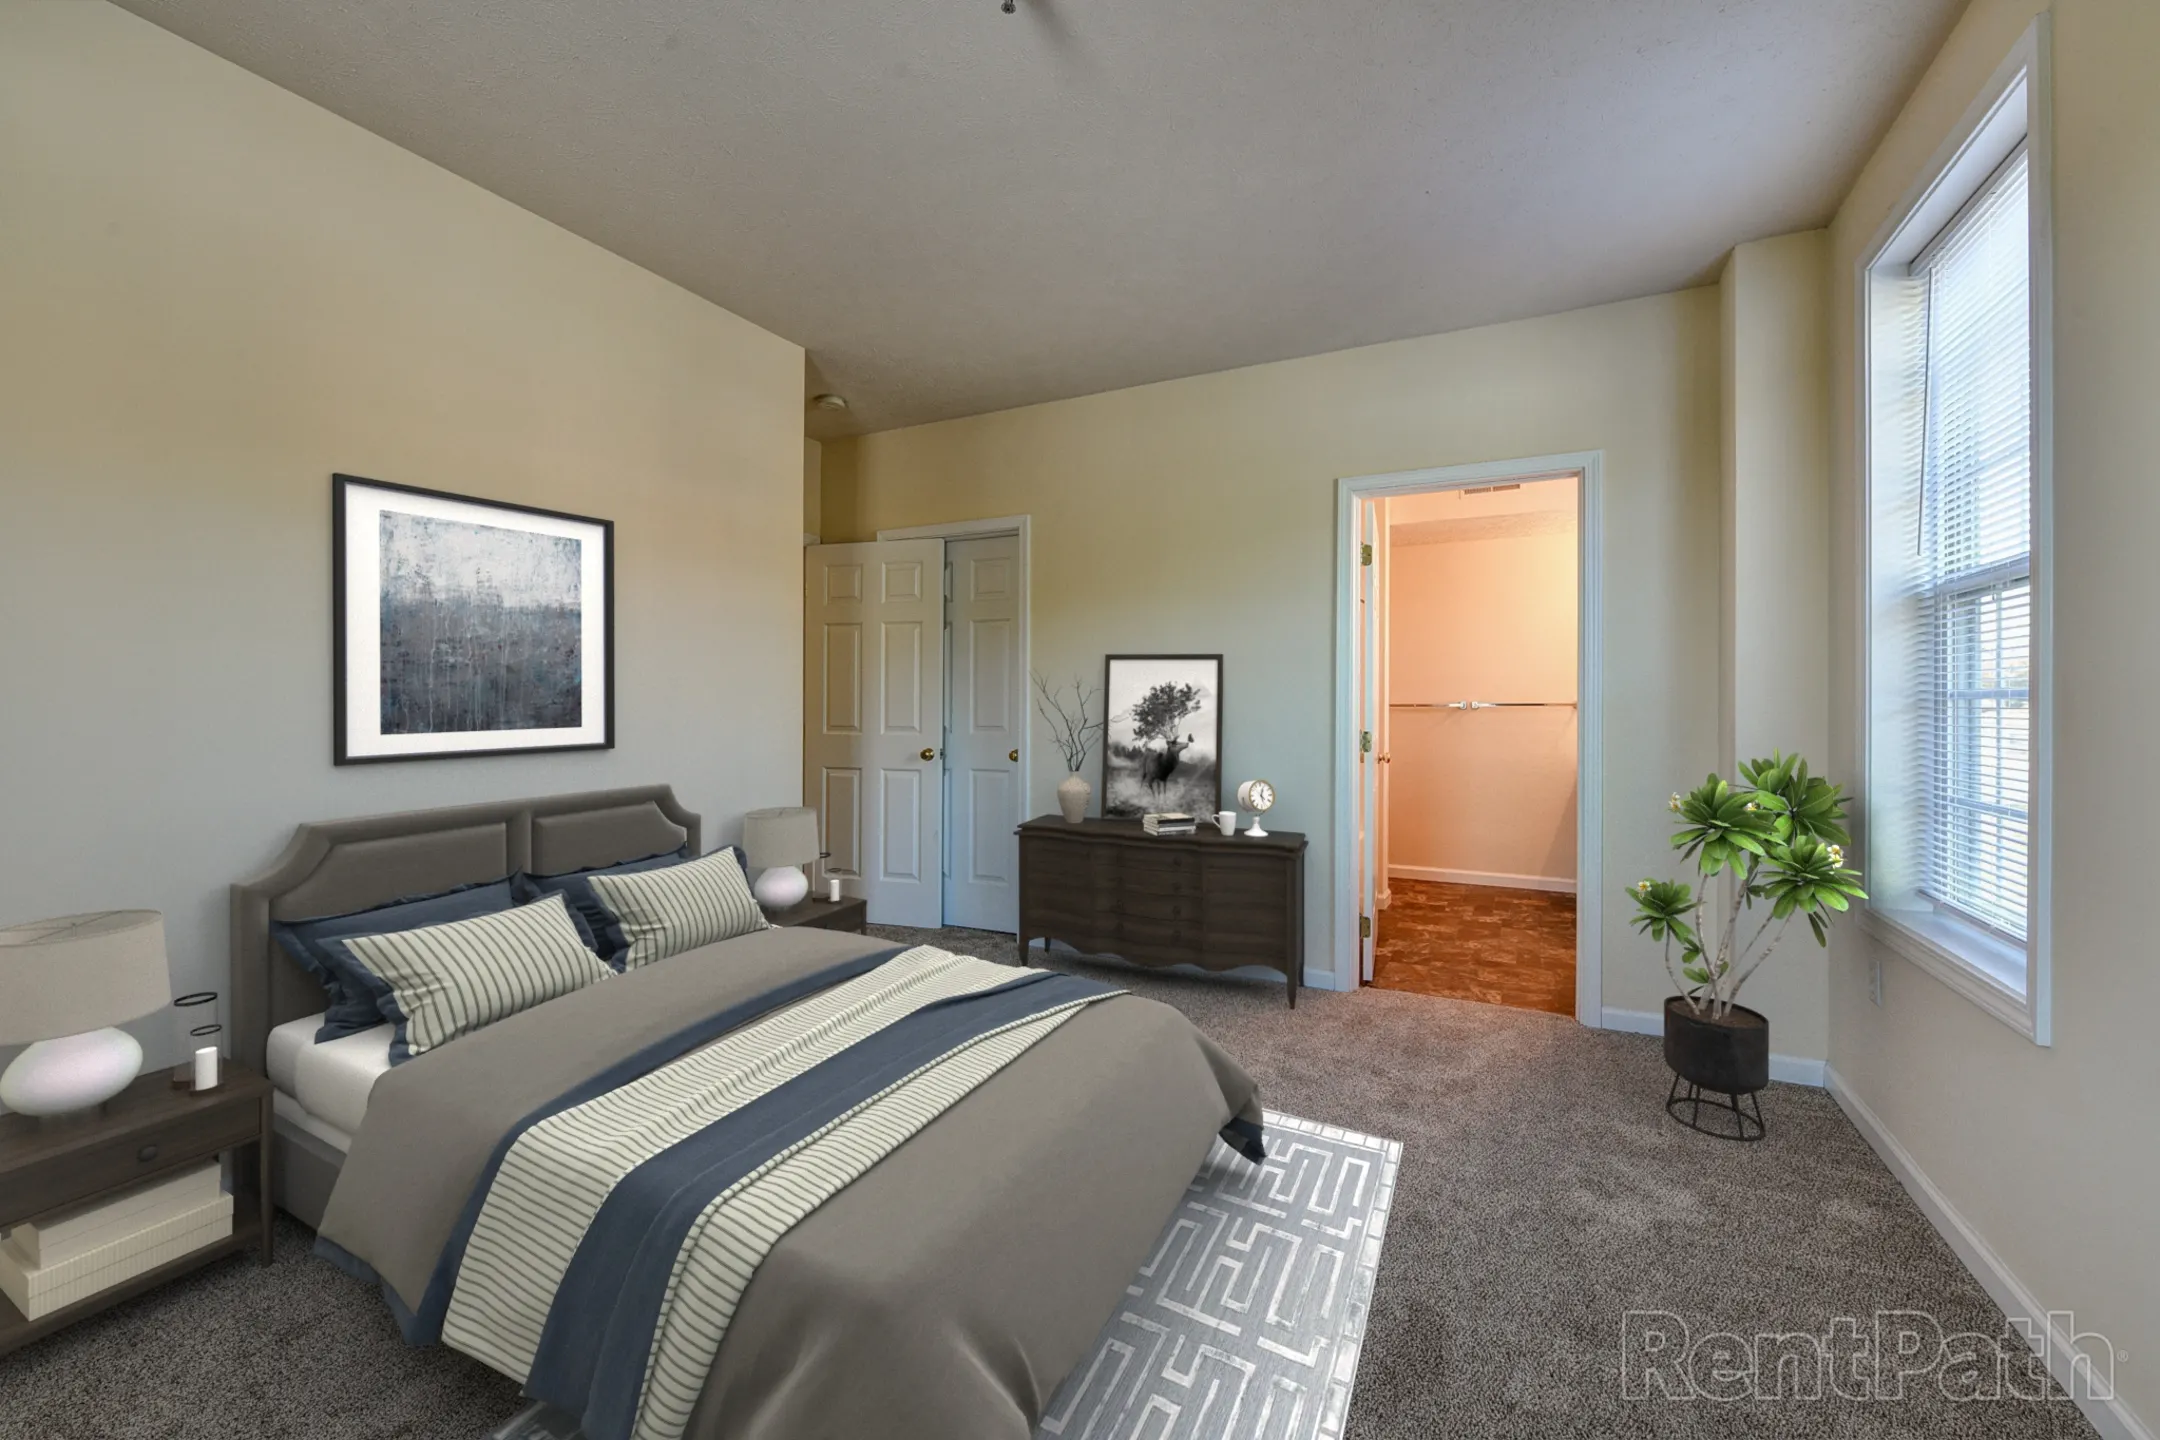 Bedroom - Newport Commons - Lititz, PA